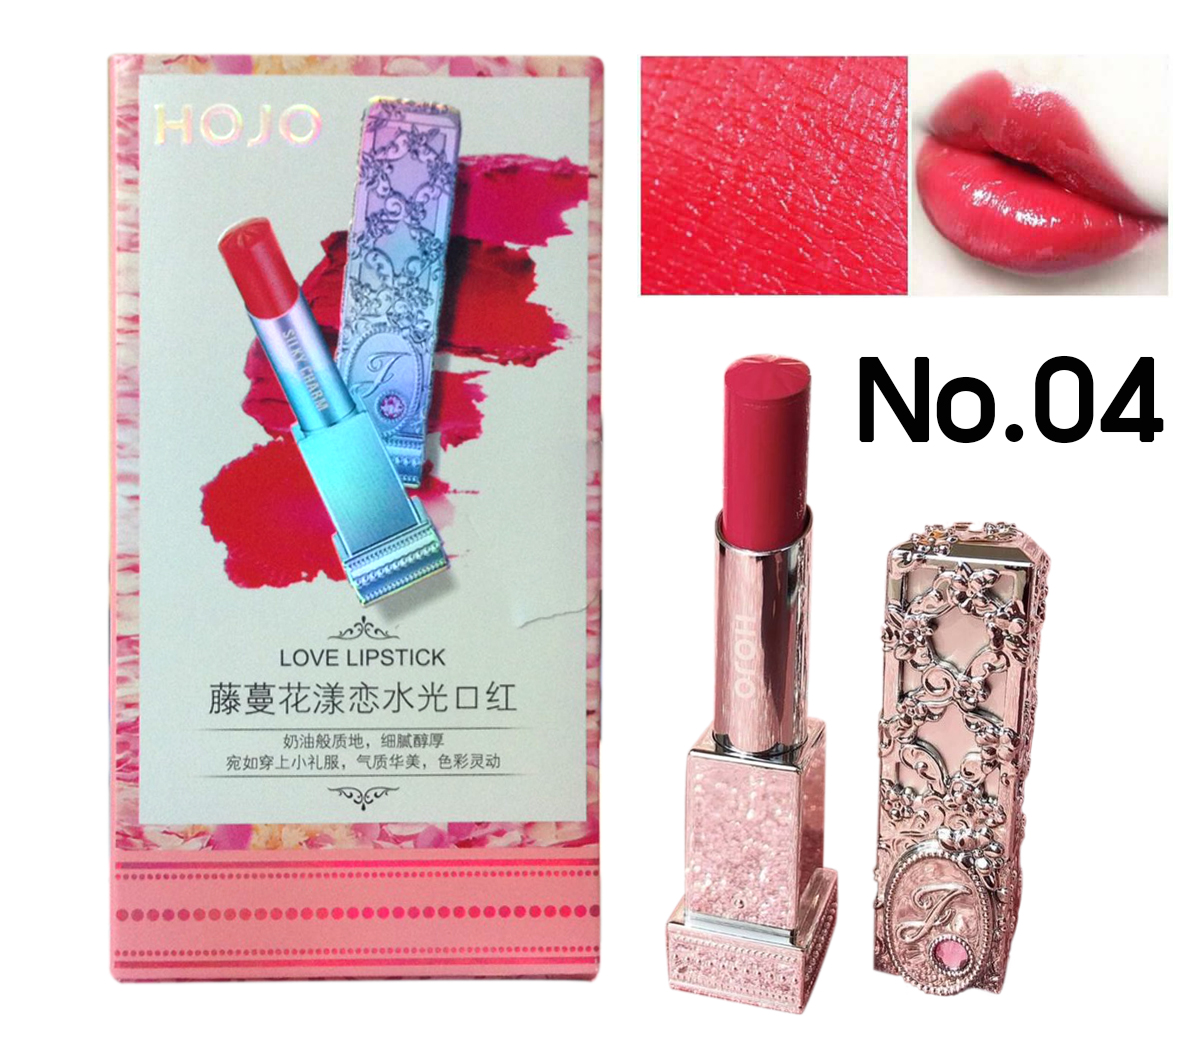 Hojo love lipstick ลิปสติกเนื้อชิฟฟ่อน No.04 ราคาส่งถูกๆ W.65 รหัส L100